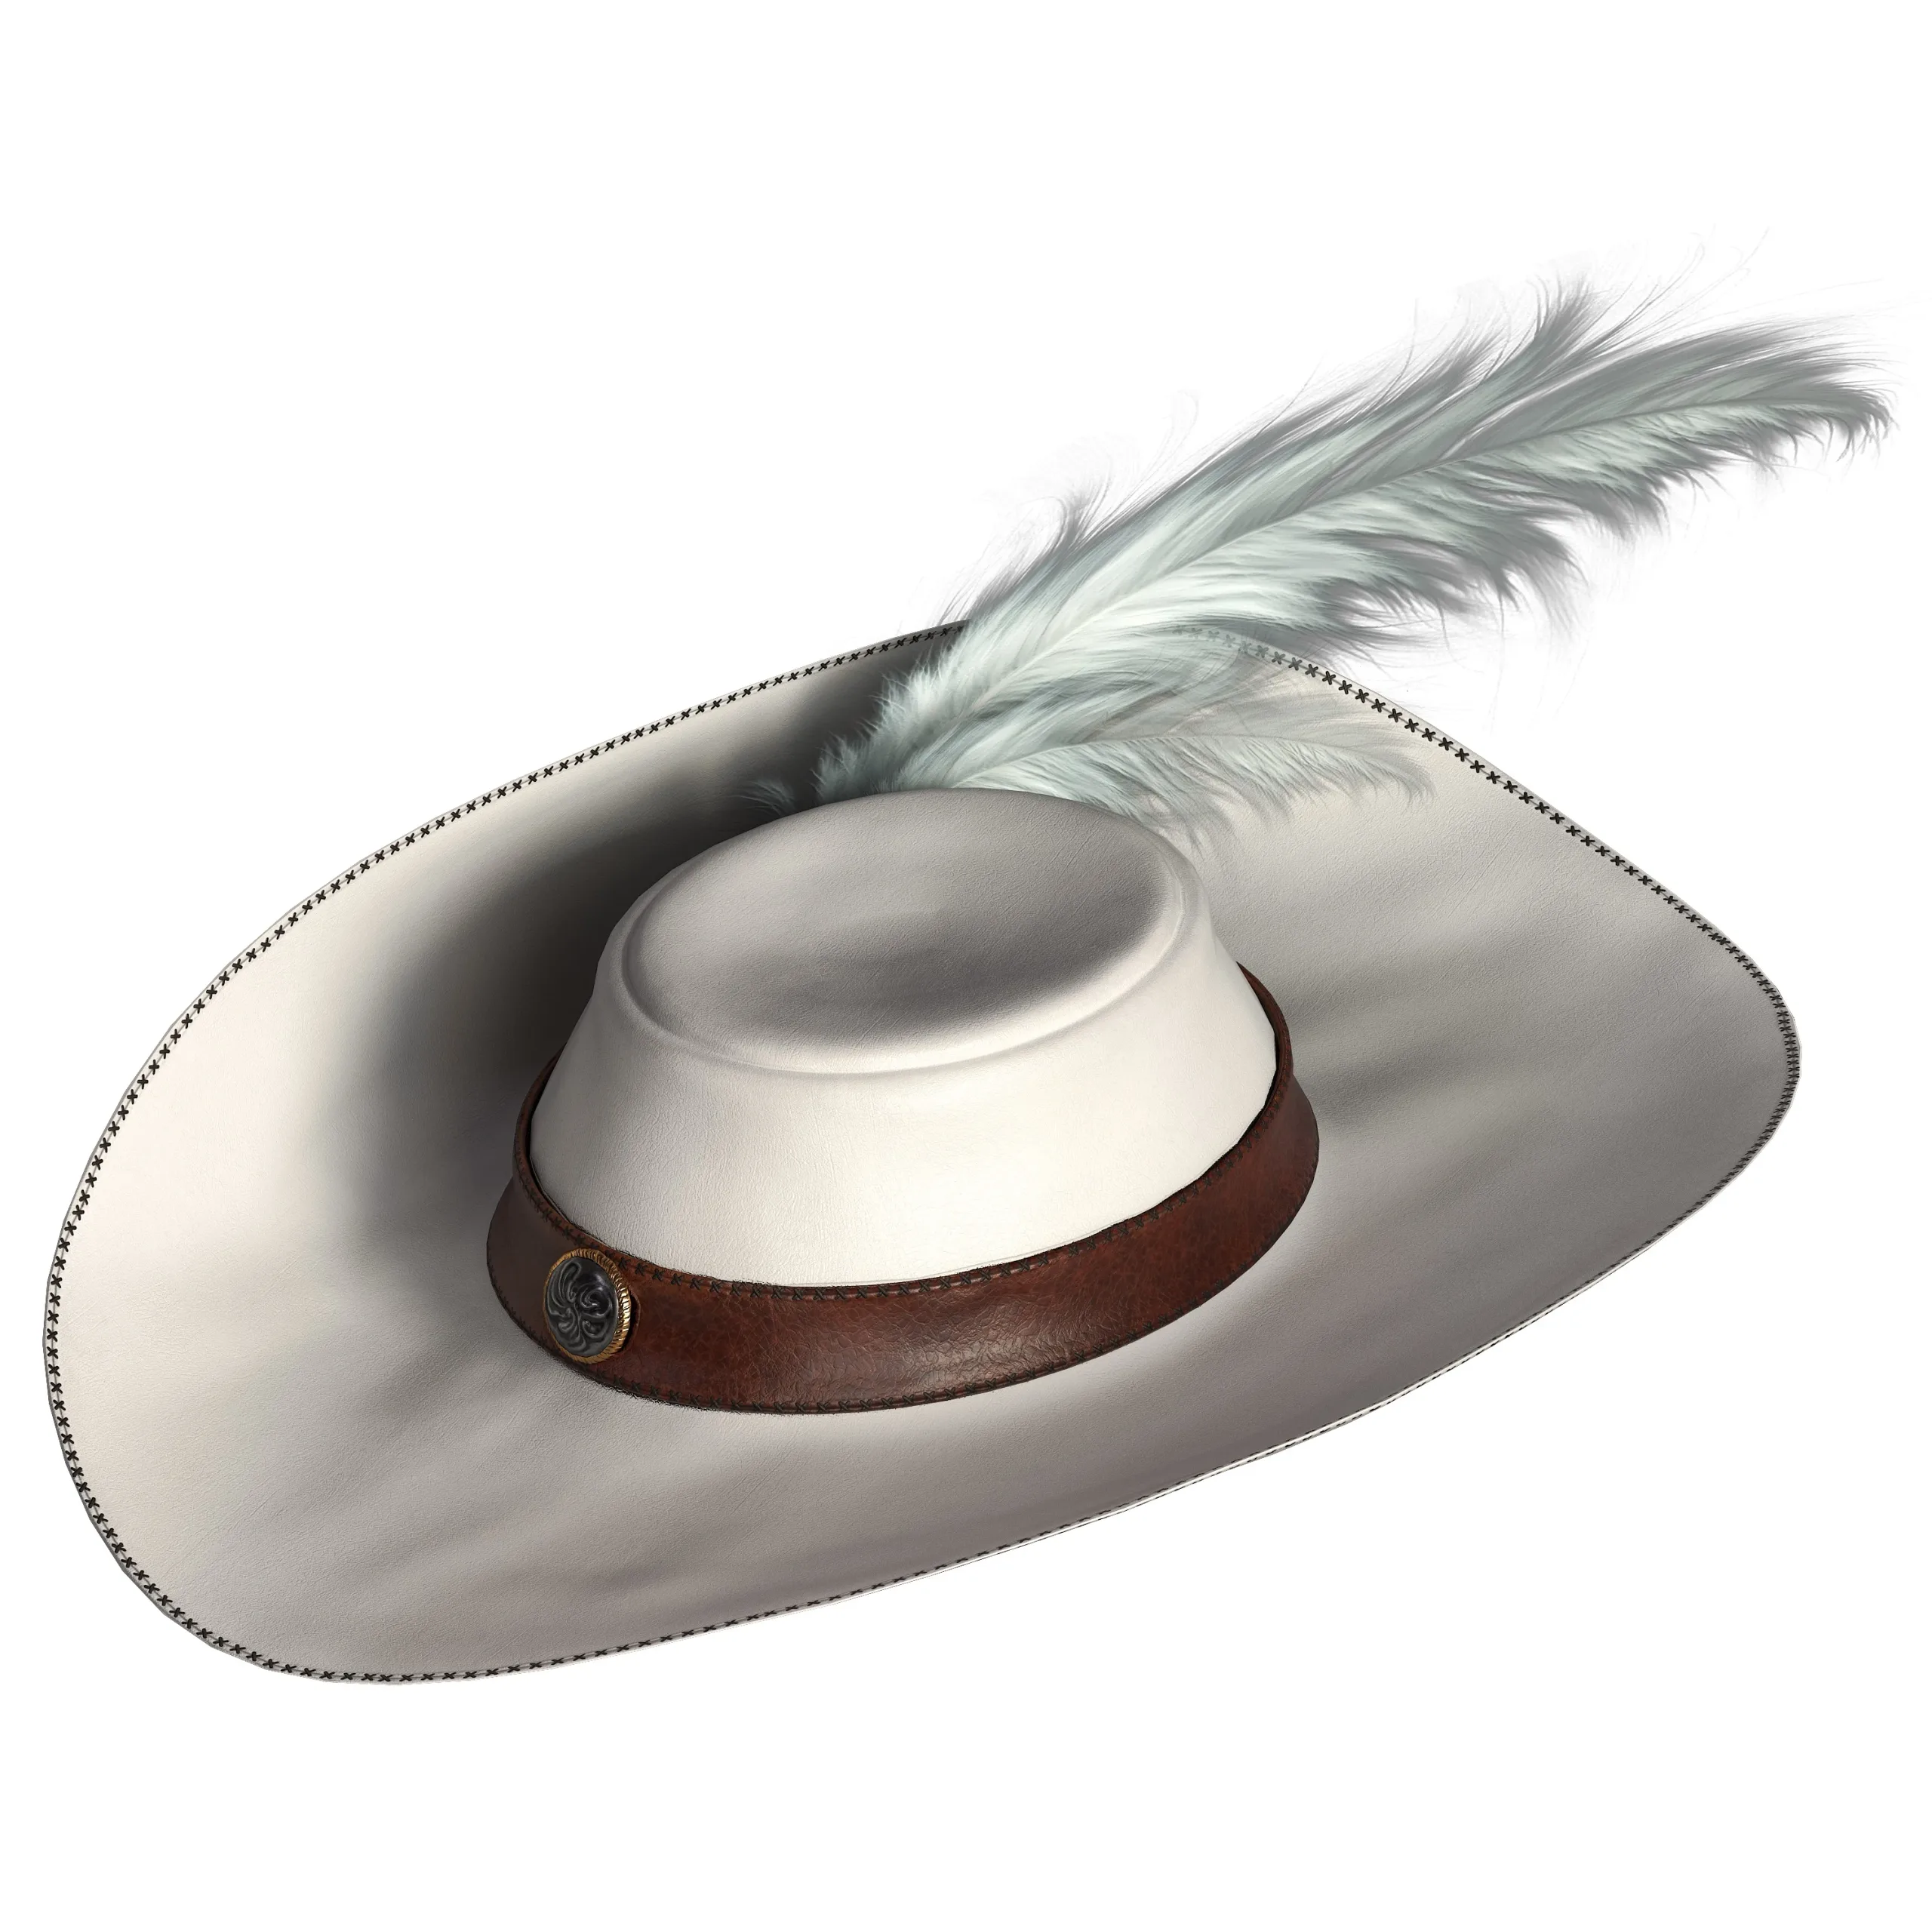 Pirate Hat 4 ( Game Asset , 3 Material Set )